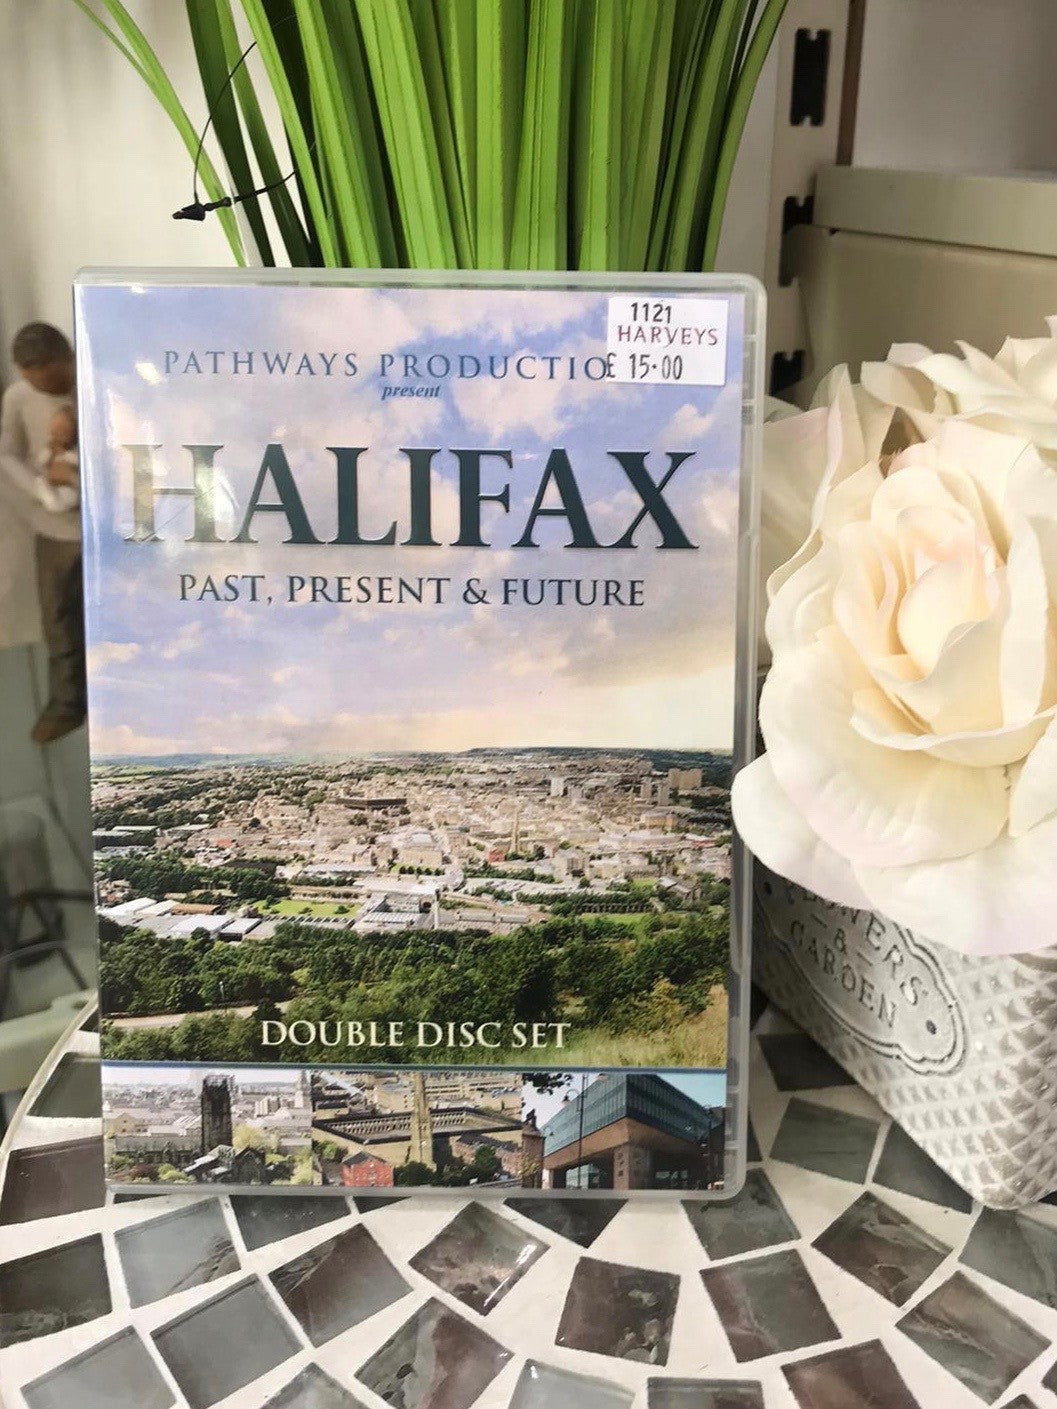 Halifax Past, Present & Future